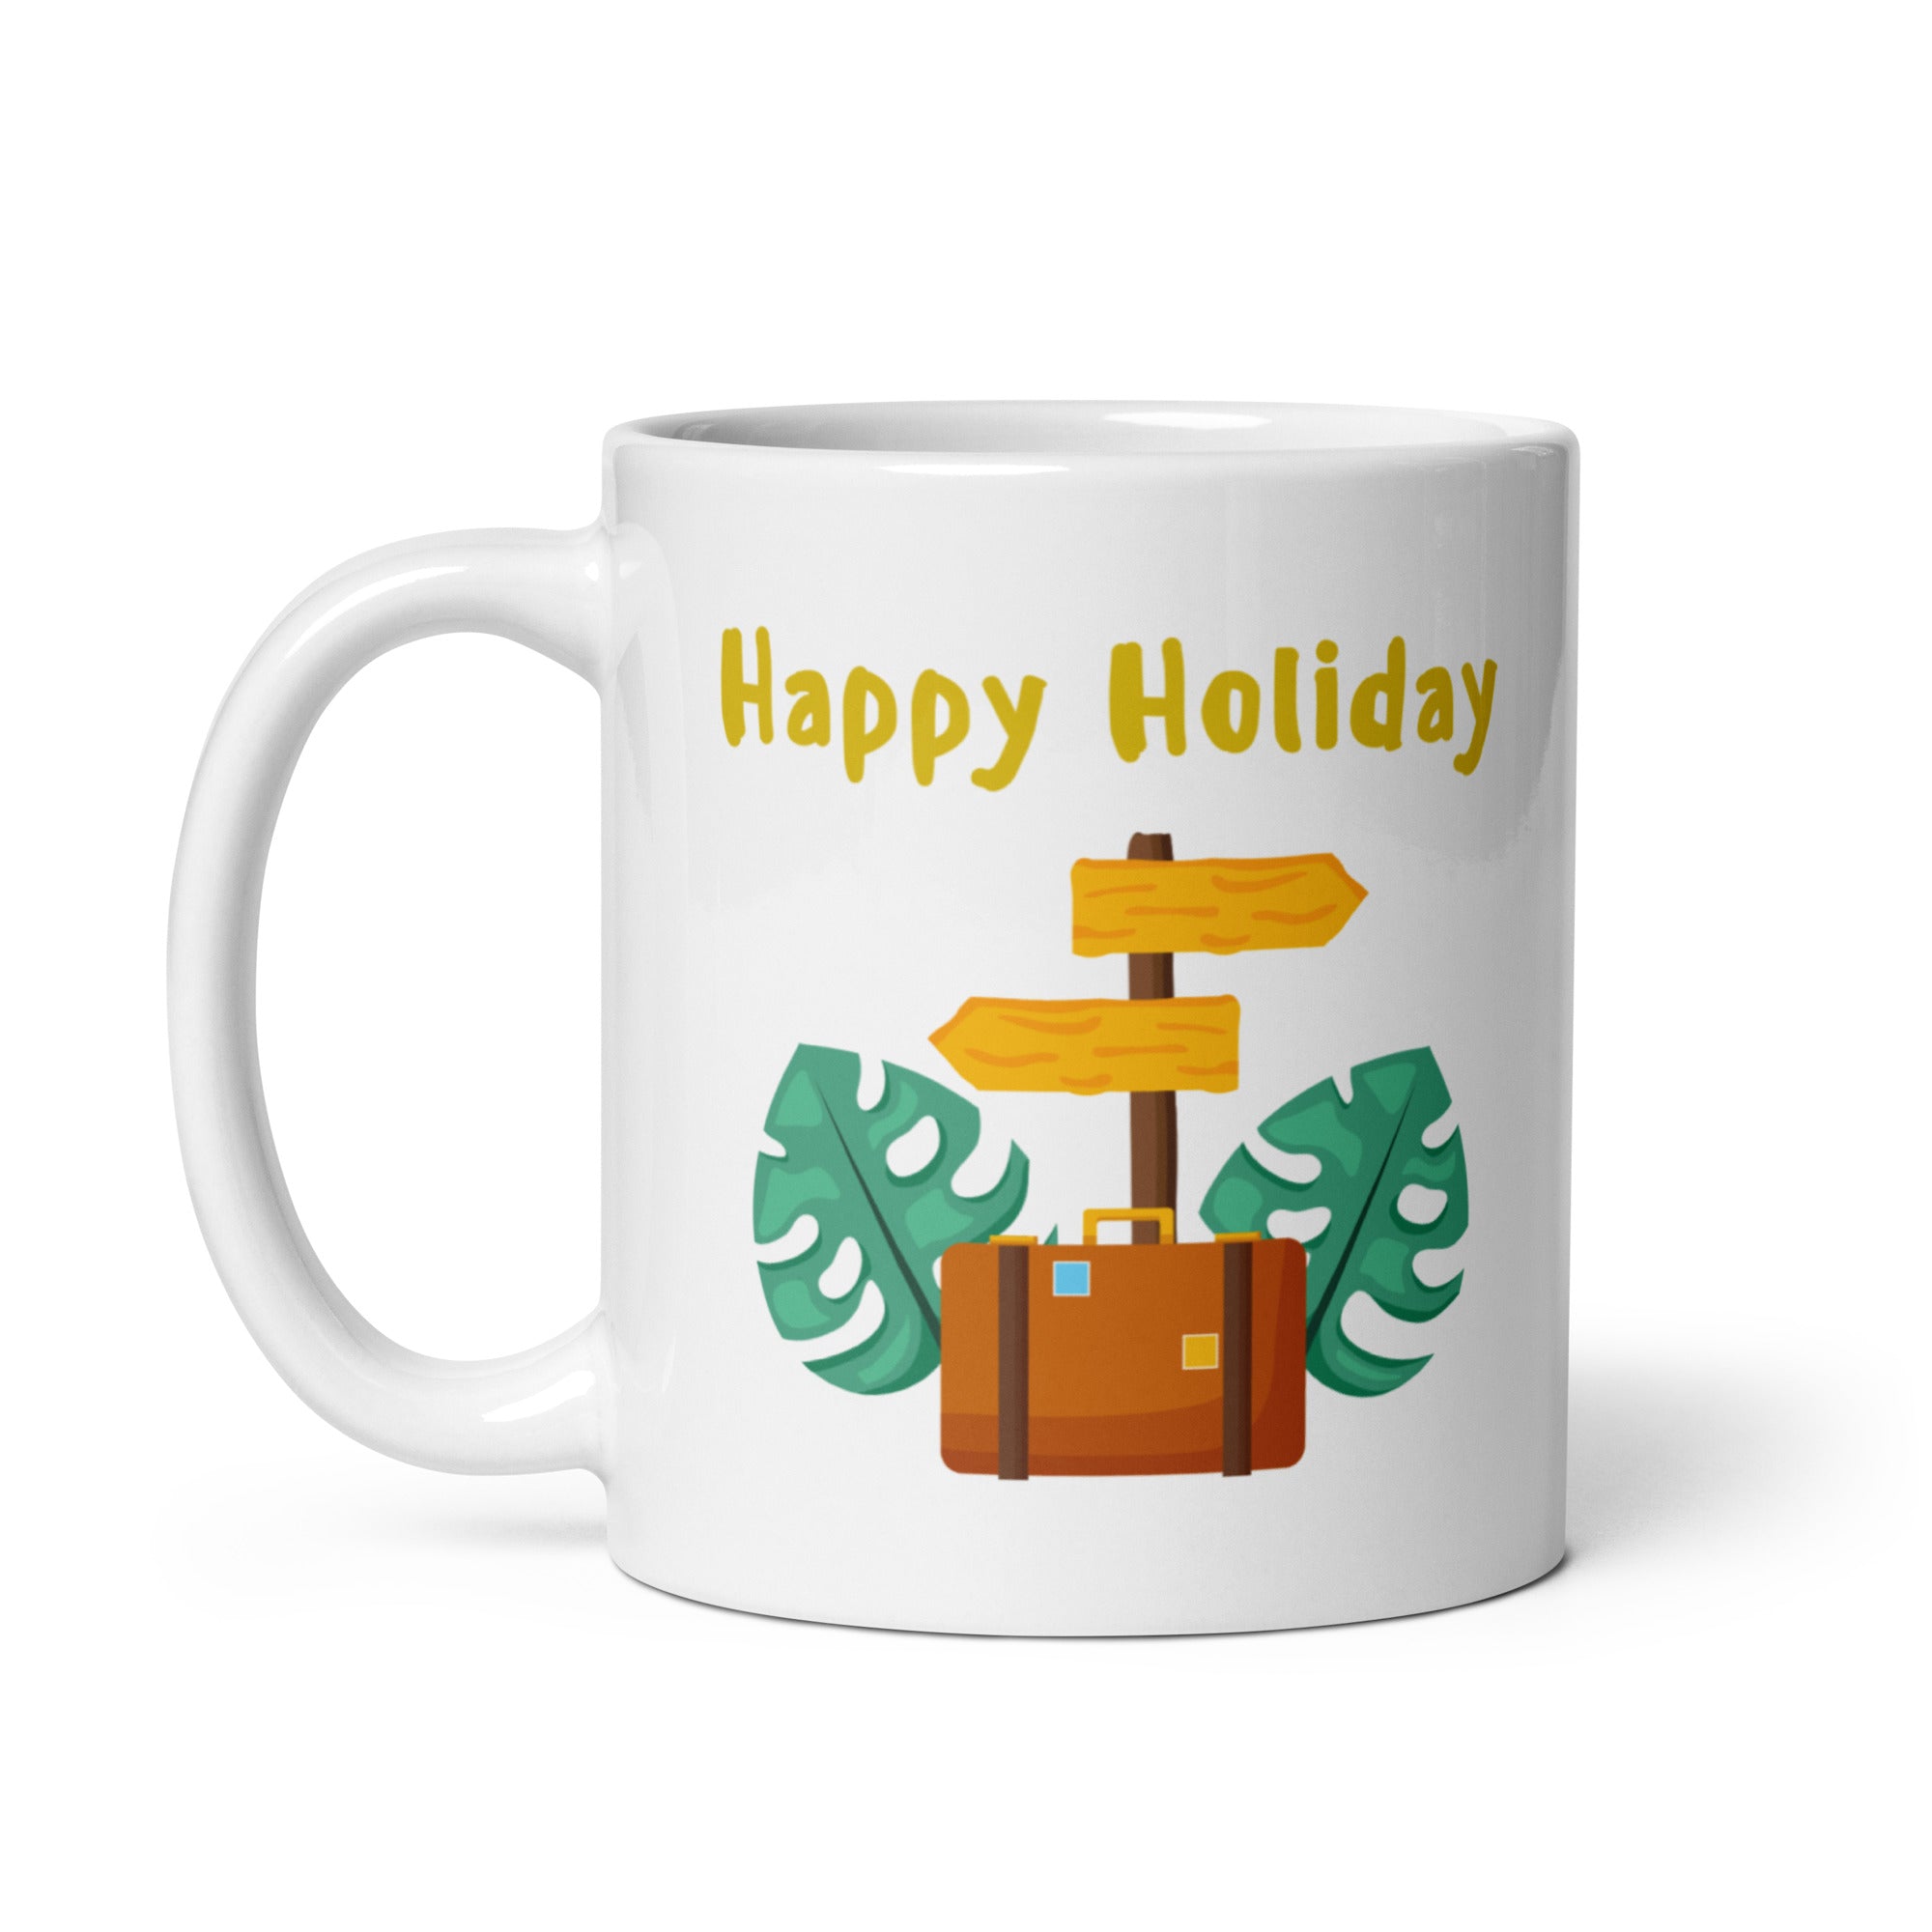 Happy Holiday - Mug